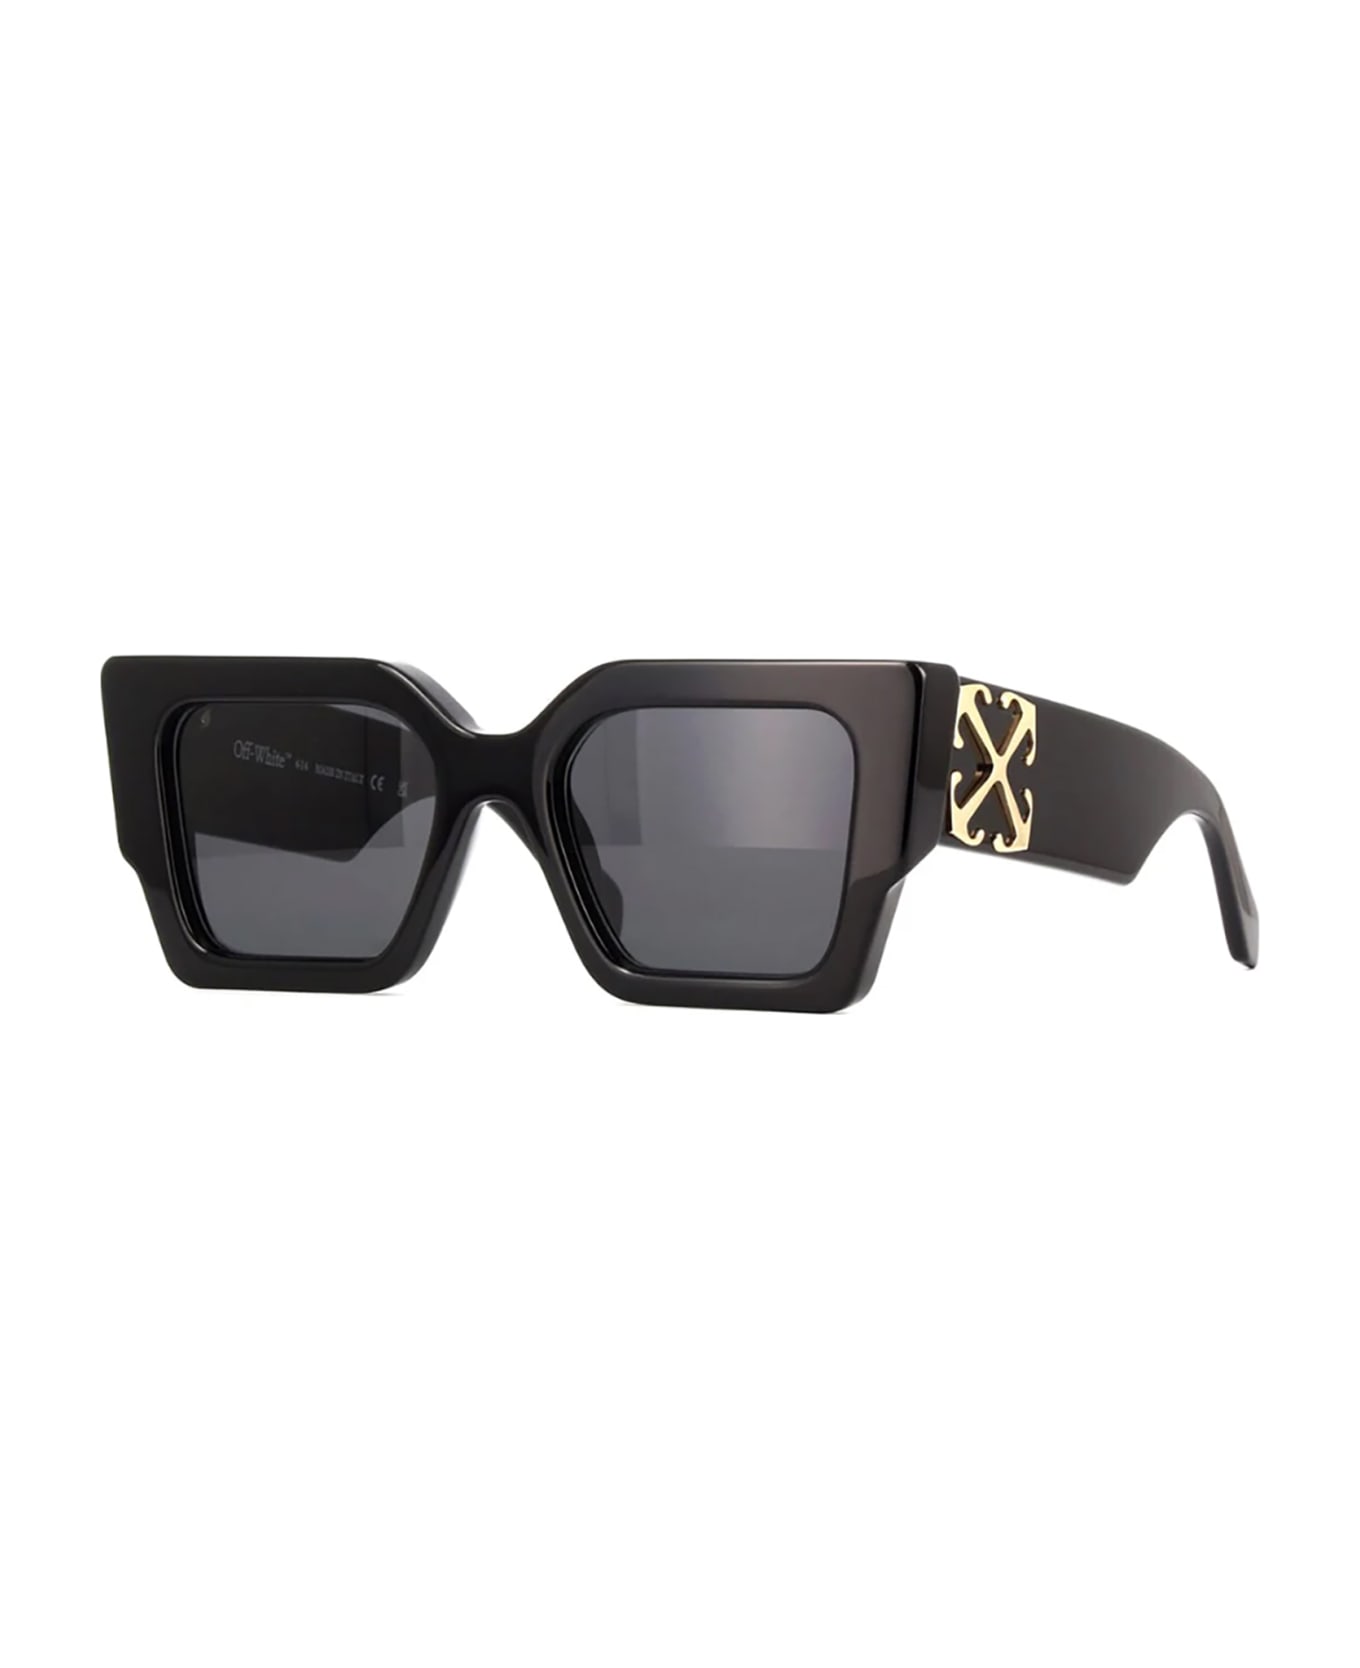 Off-White OERI128 CATALINA Sunglasses - Black